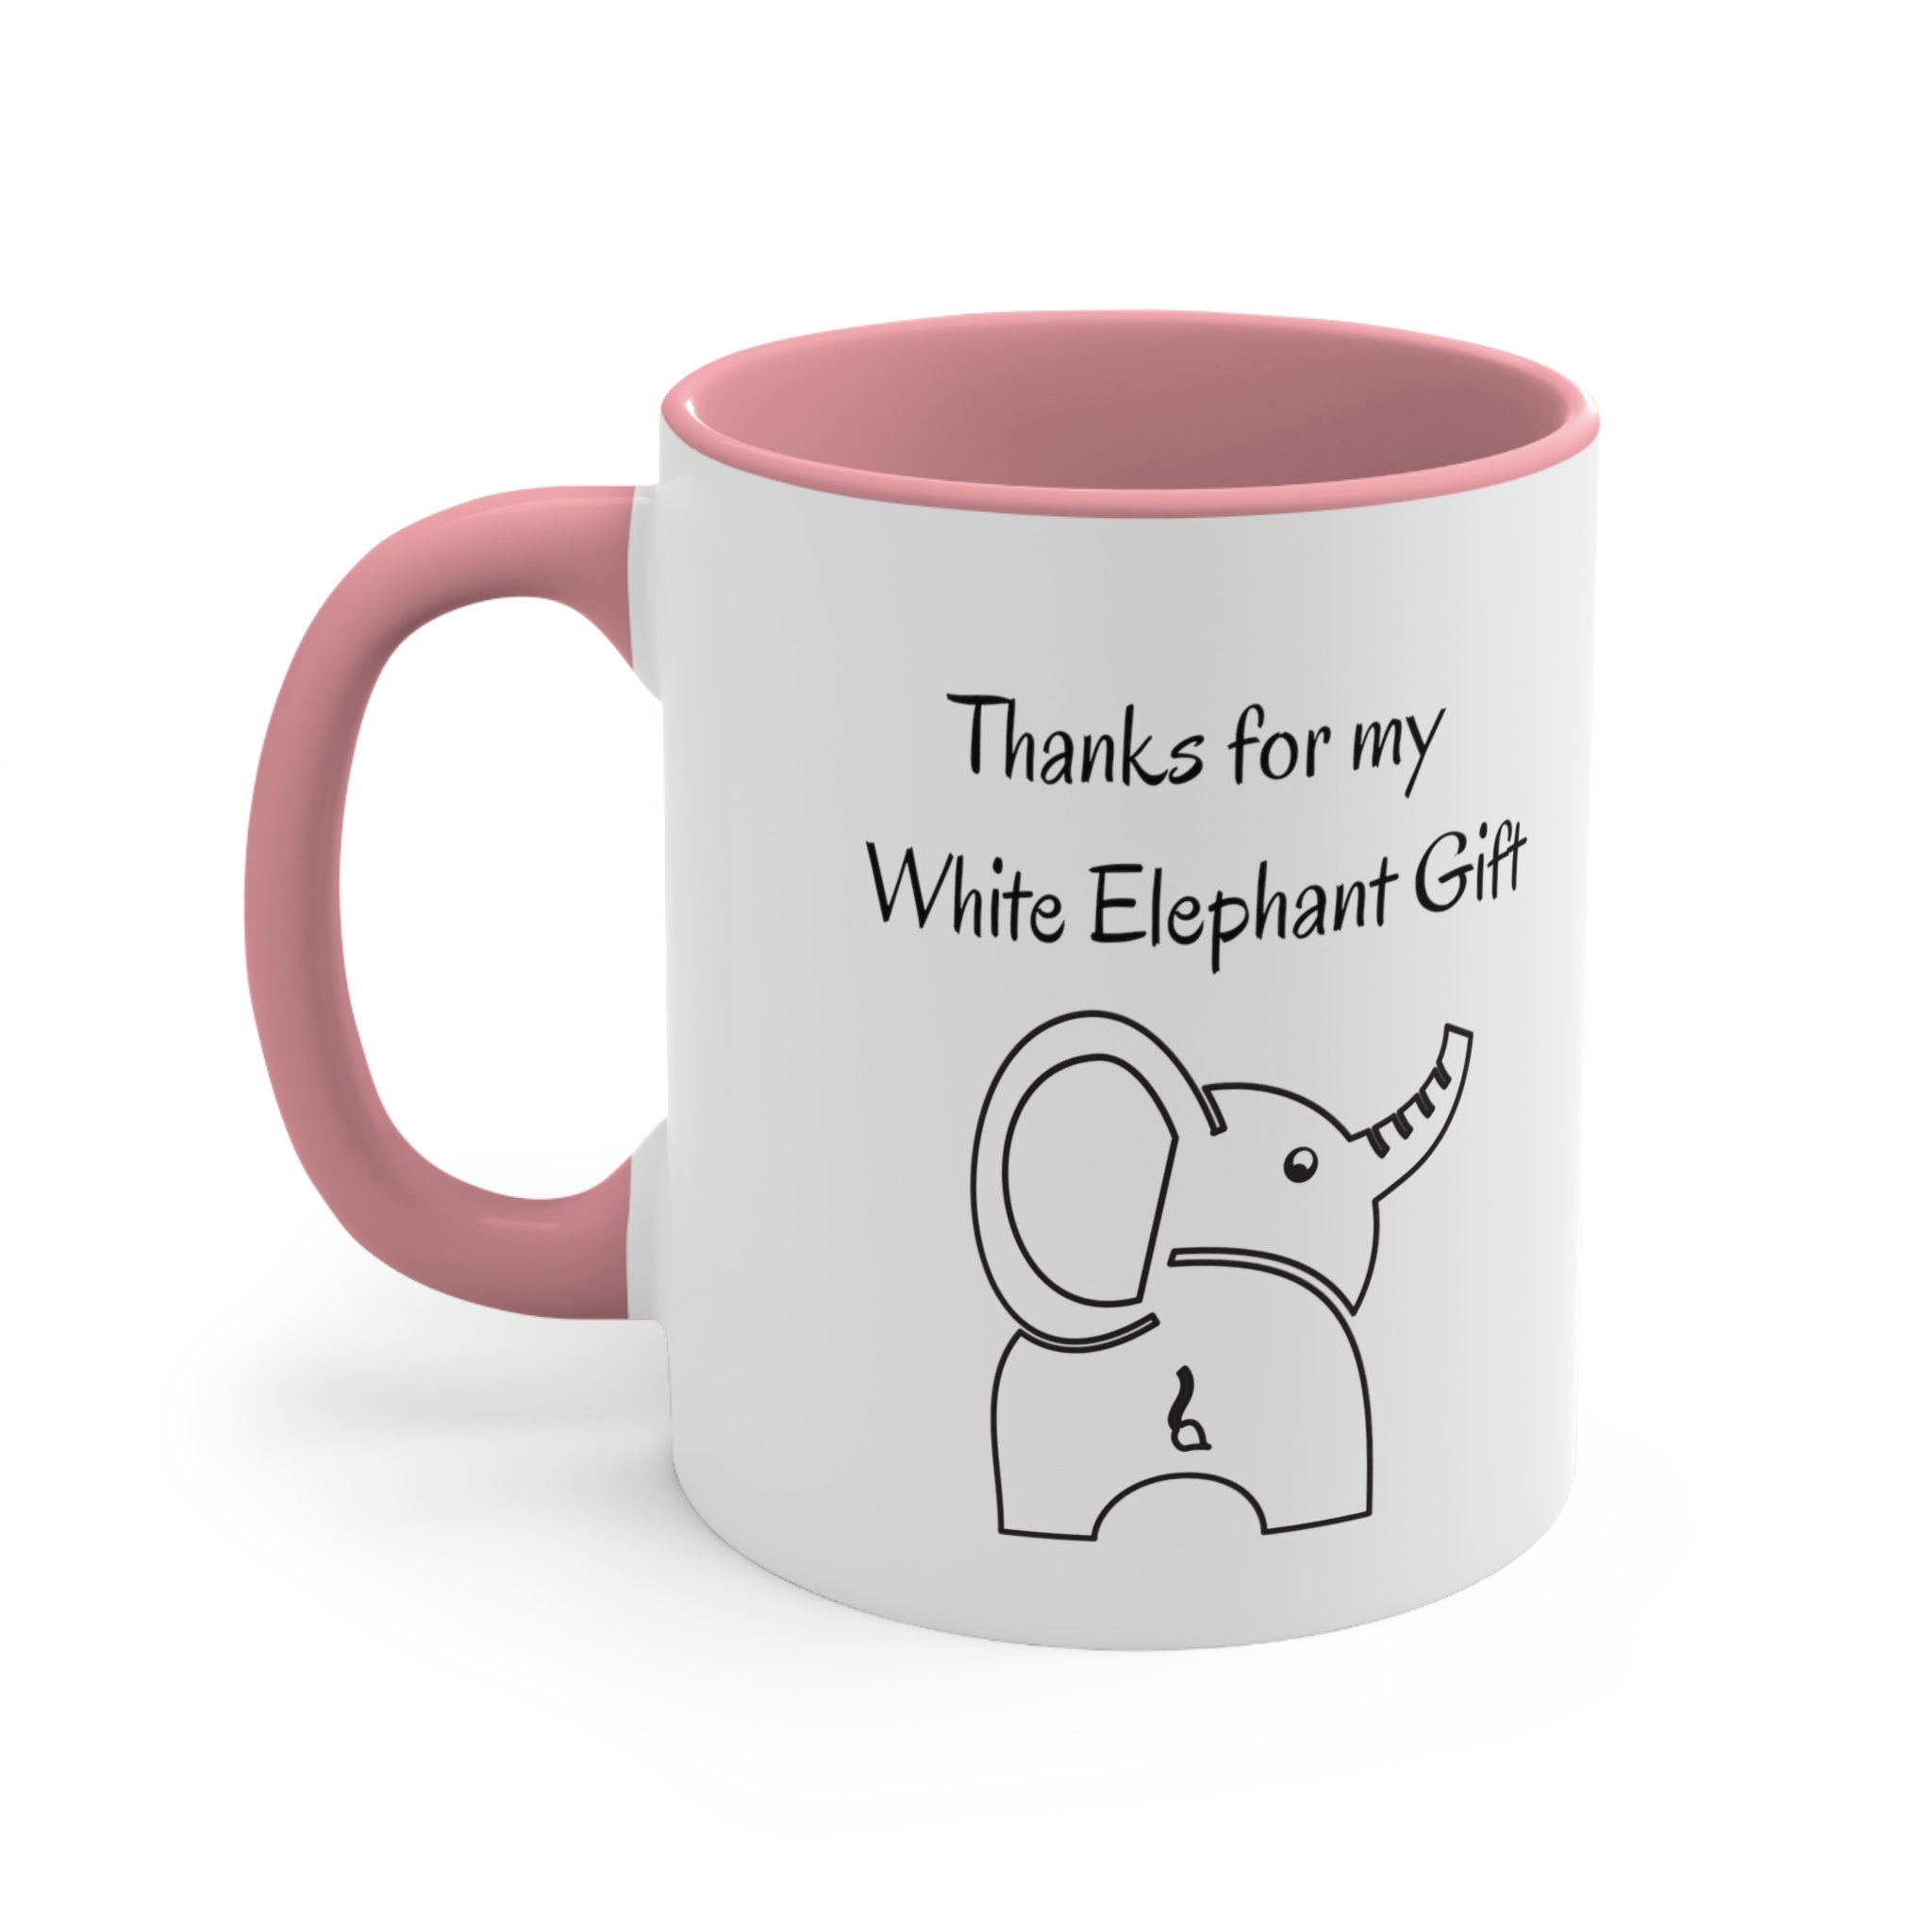 Best White Elephant Gift Ever Coffee Mug - White Elephant Coffee Mugs - Unique Gifts Idea